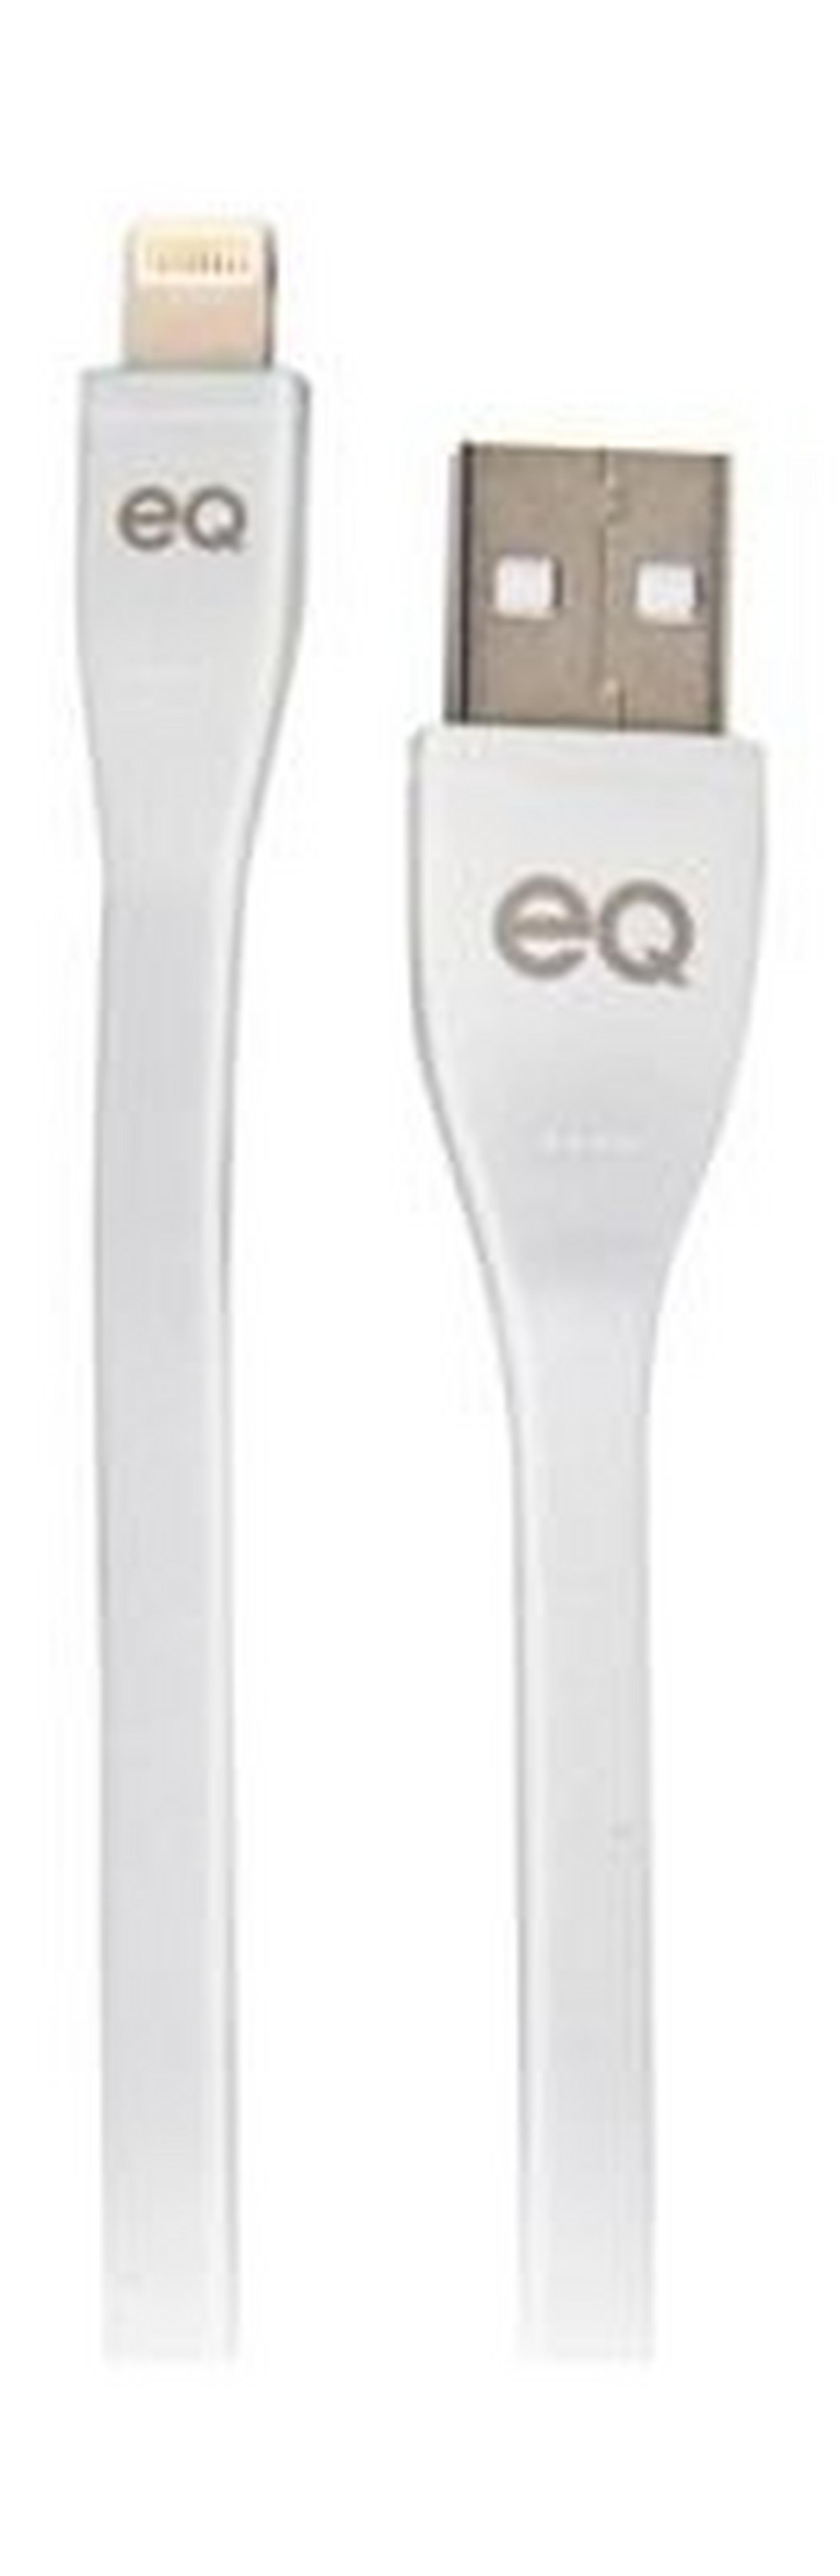 EQ Lightning Cable 15cm - White